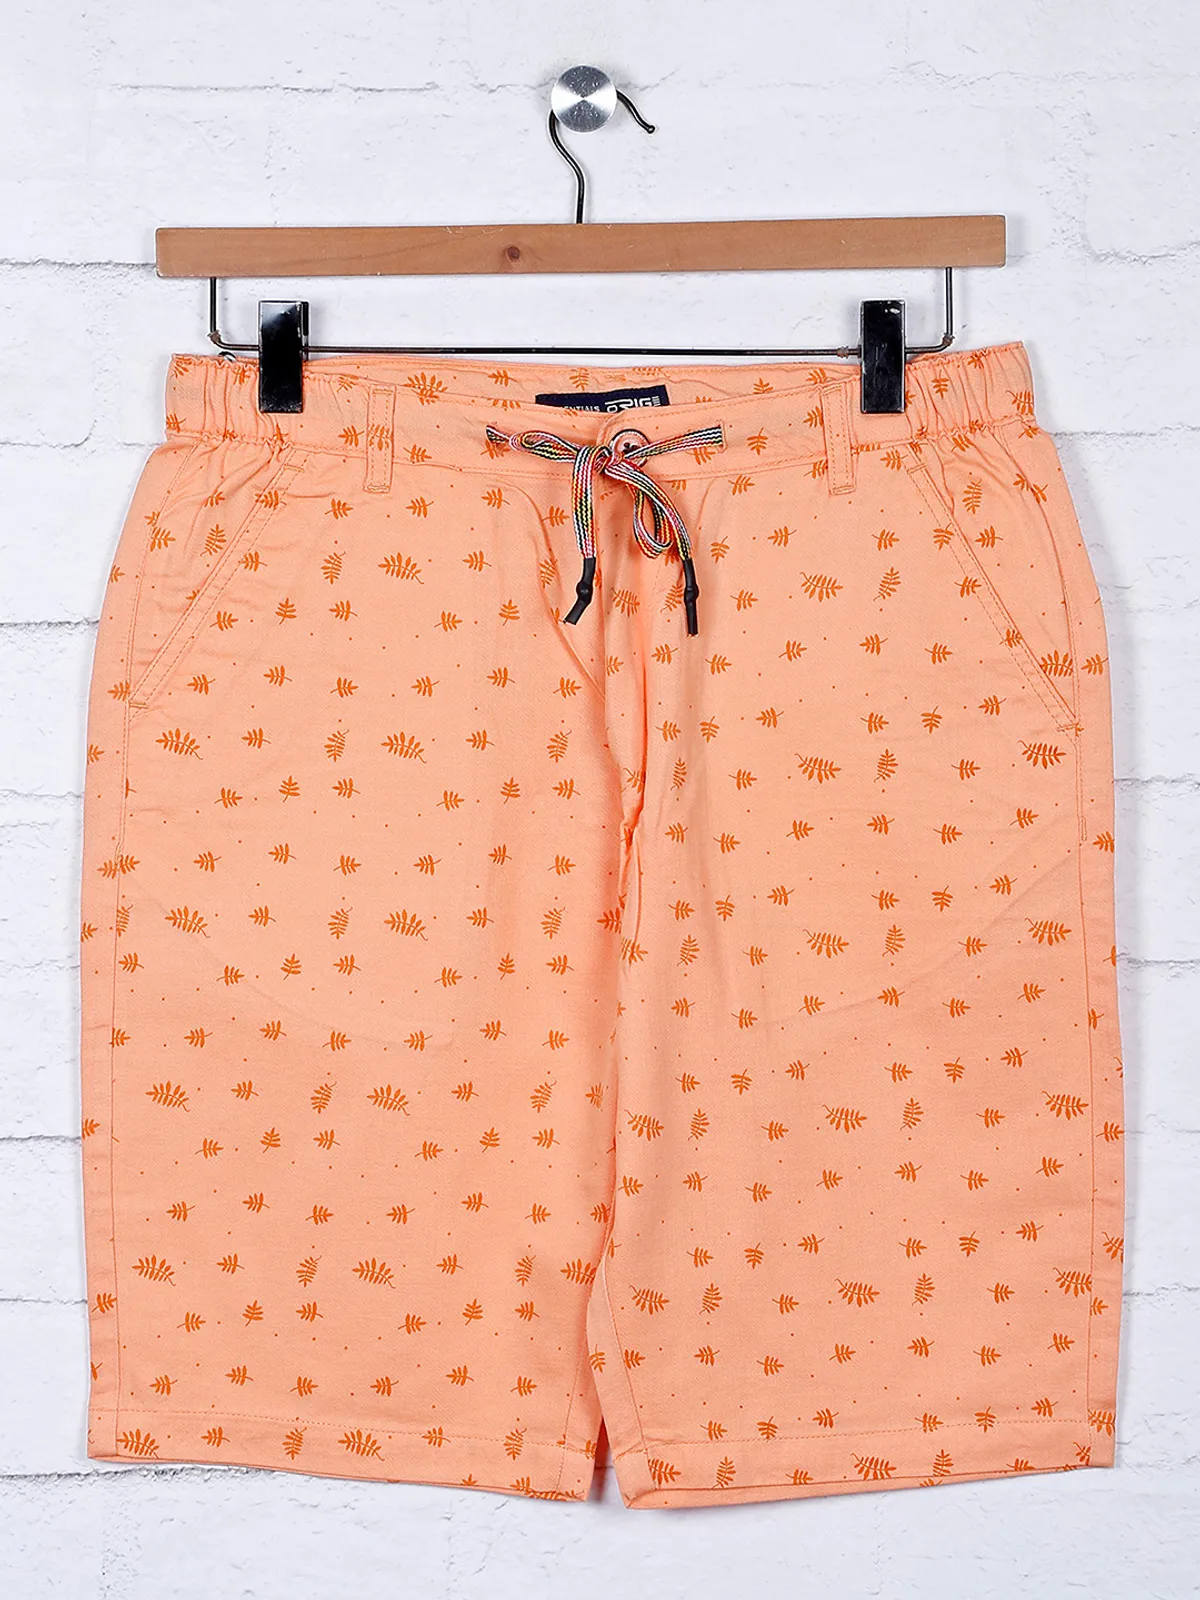 Origin printed pattern peach cotton shorts